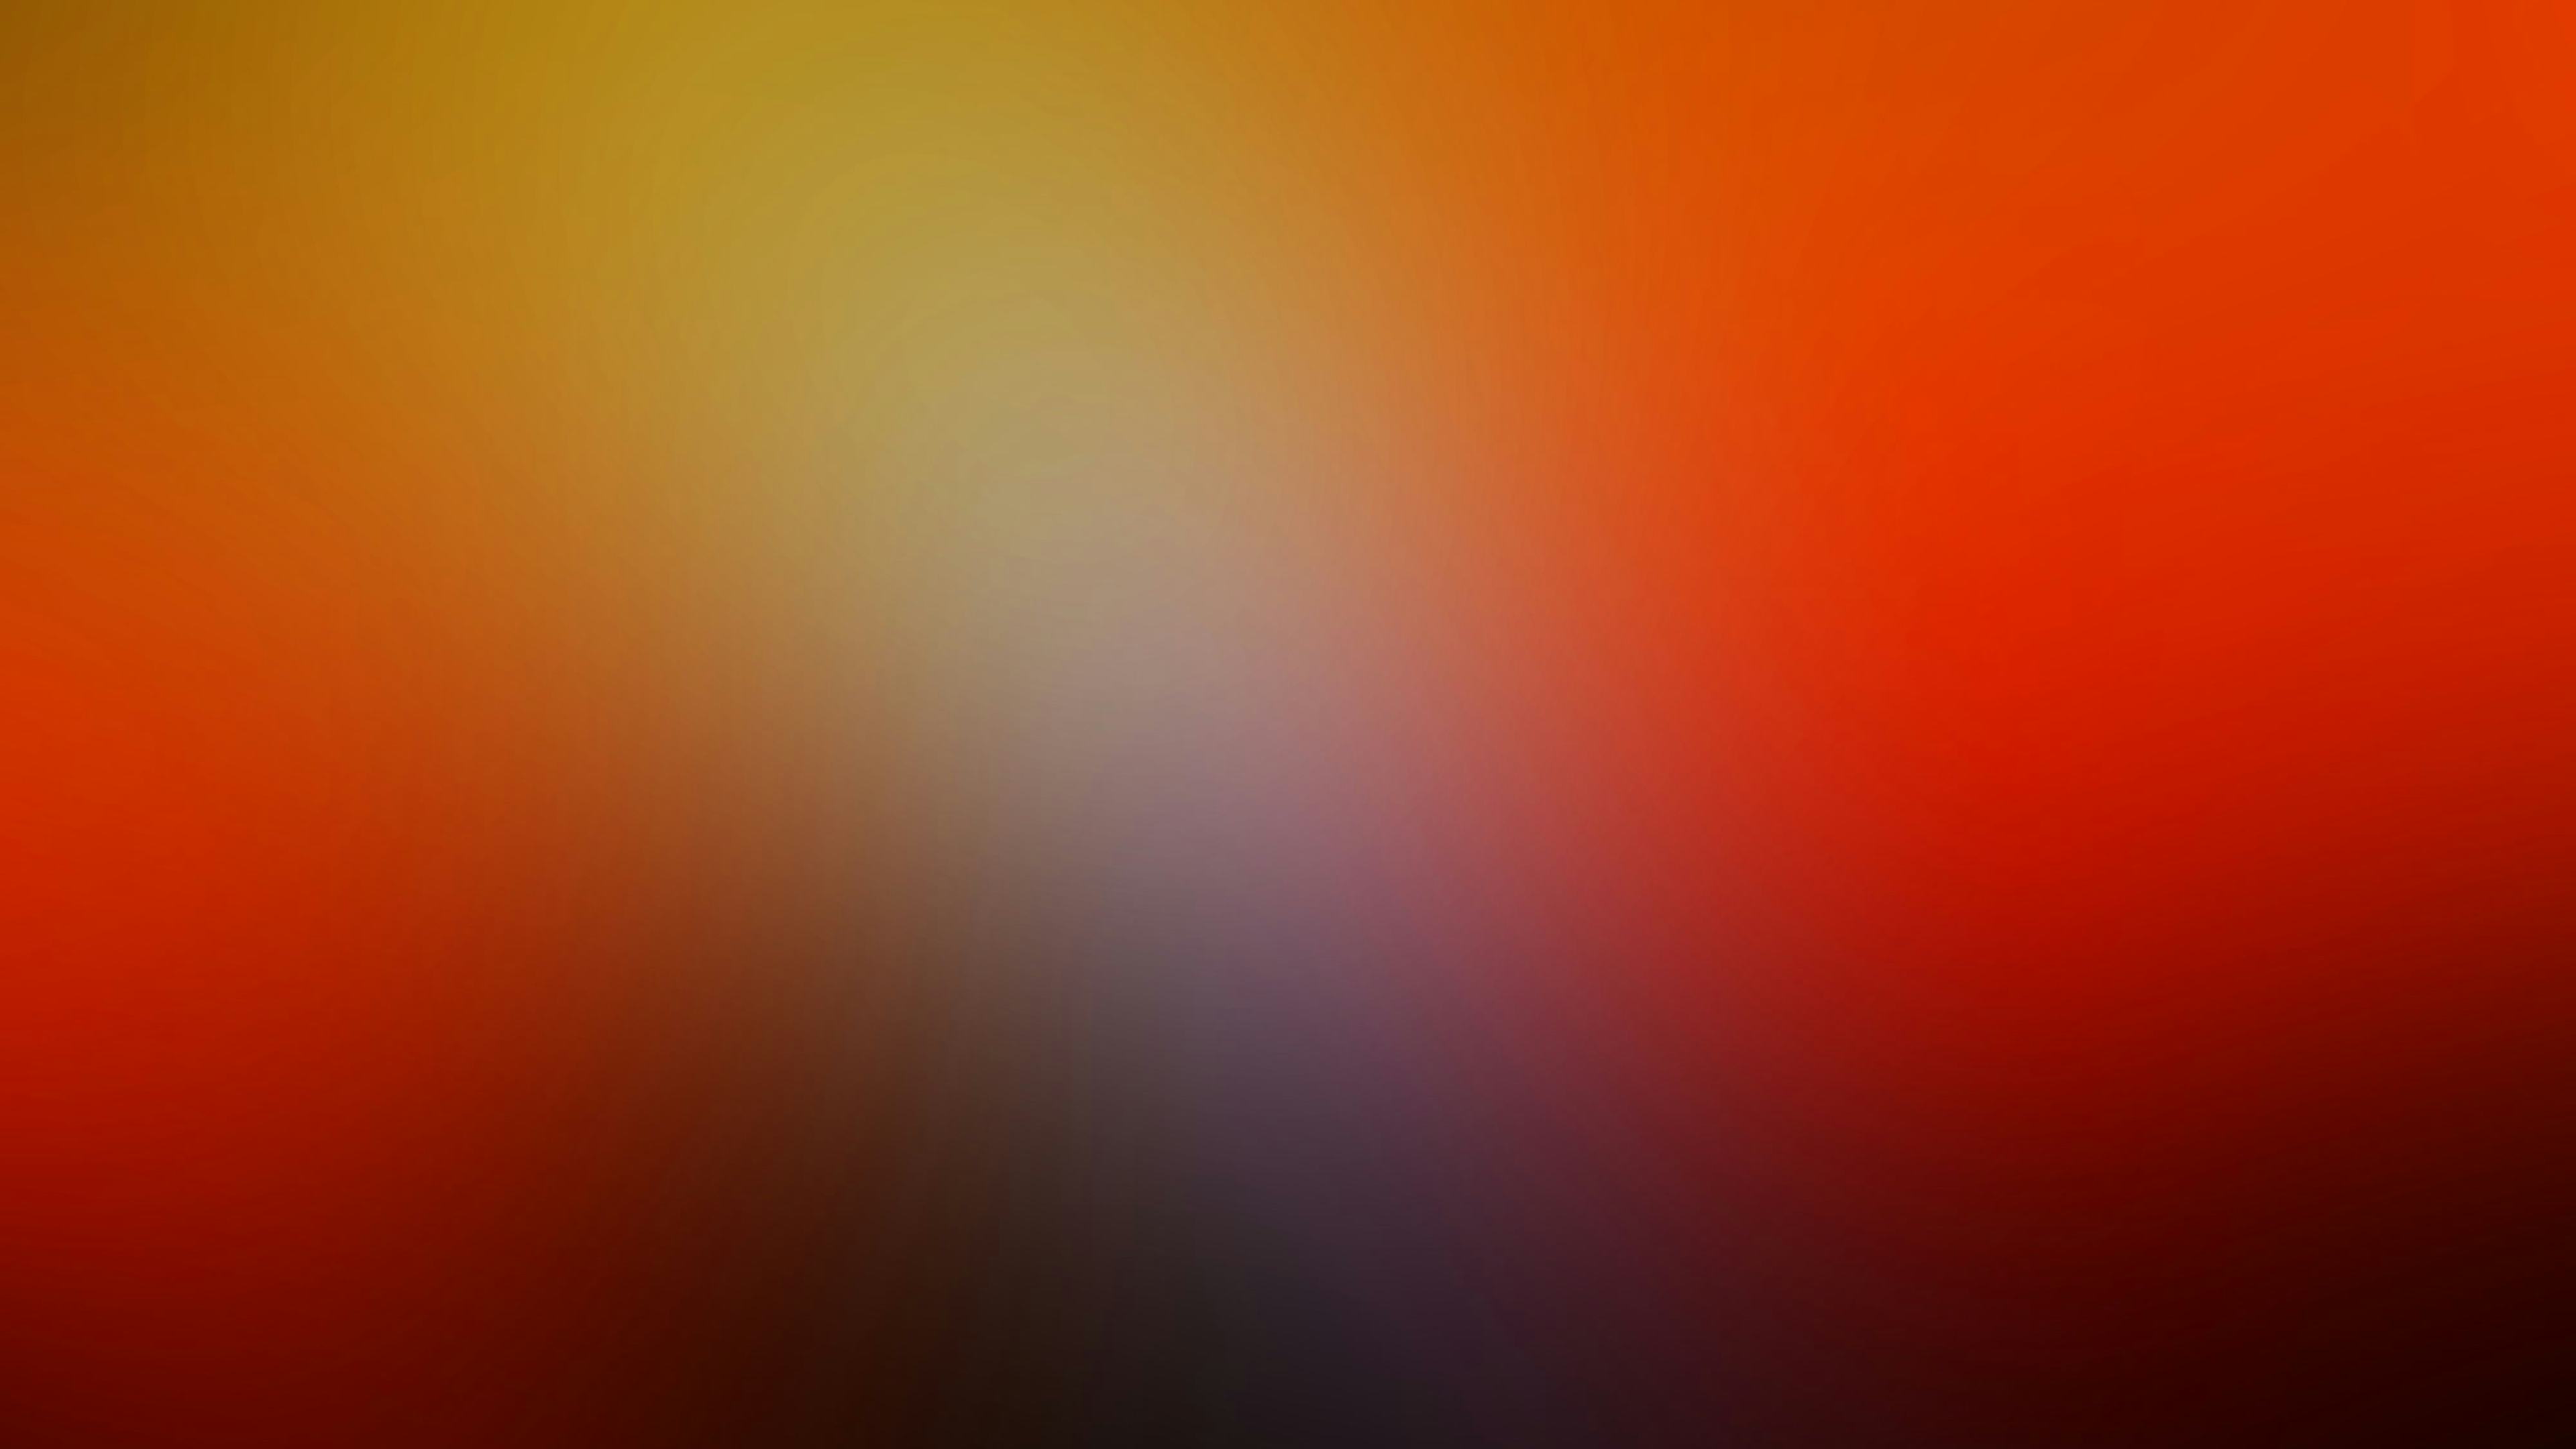 red, orange, yellow, and grey blur gradient background